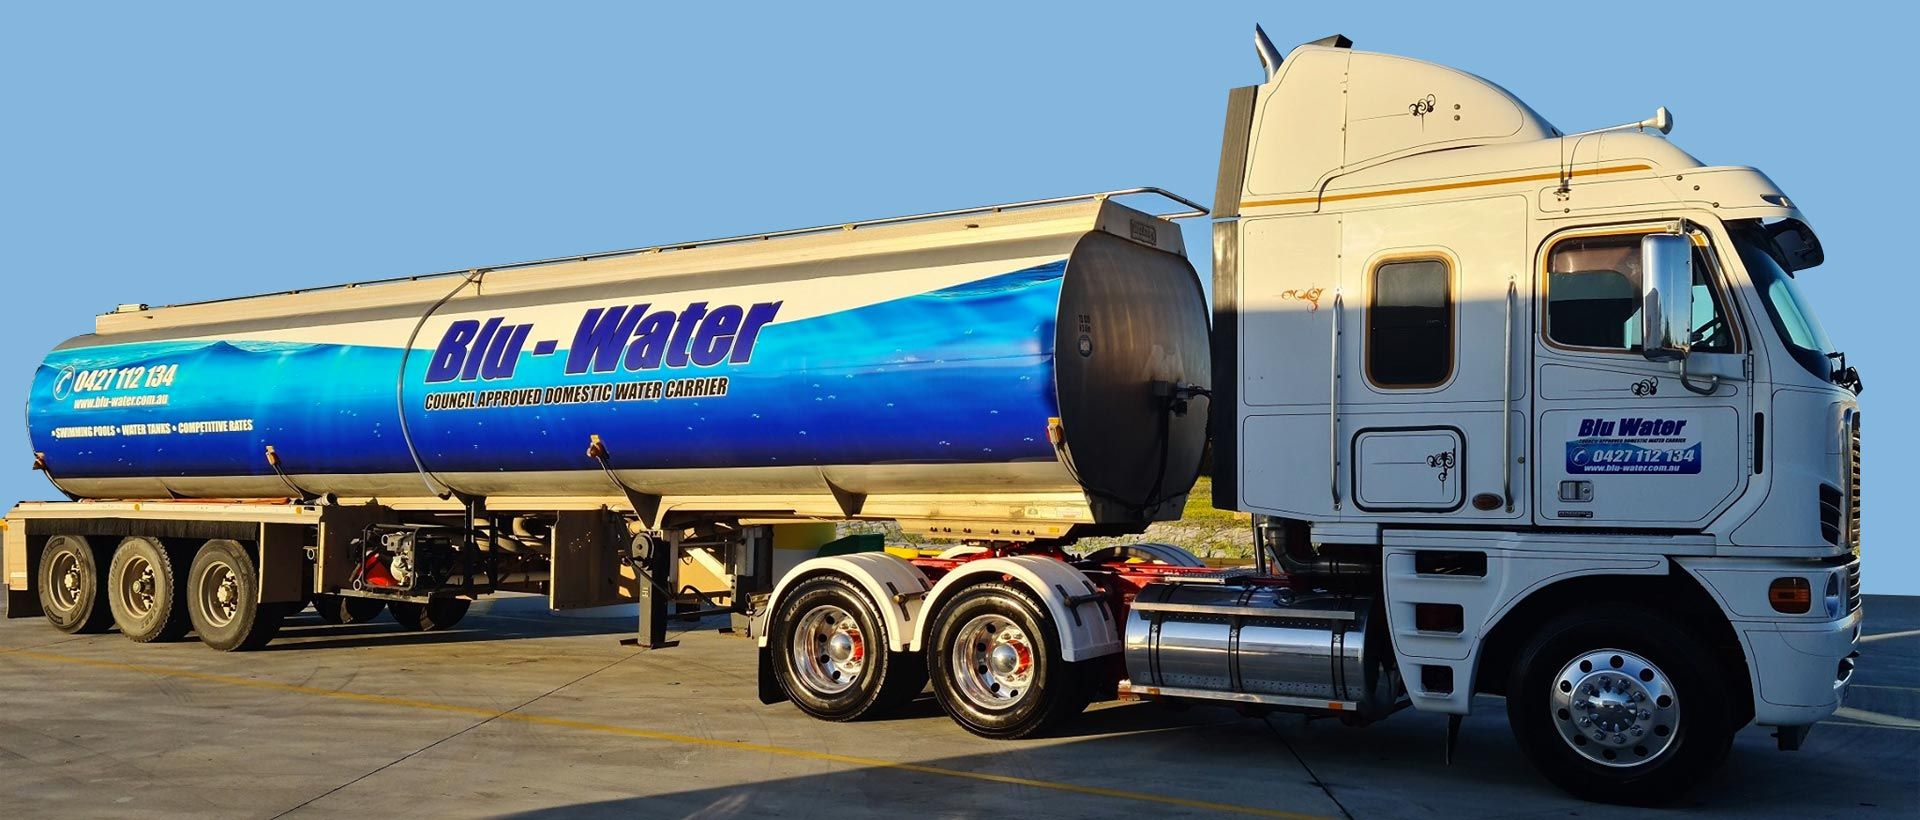 Blu-Water Truck